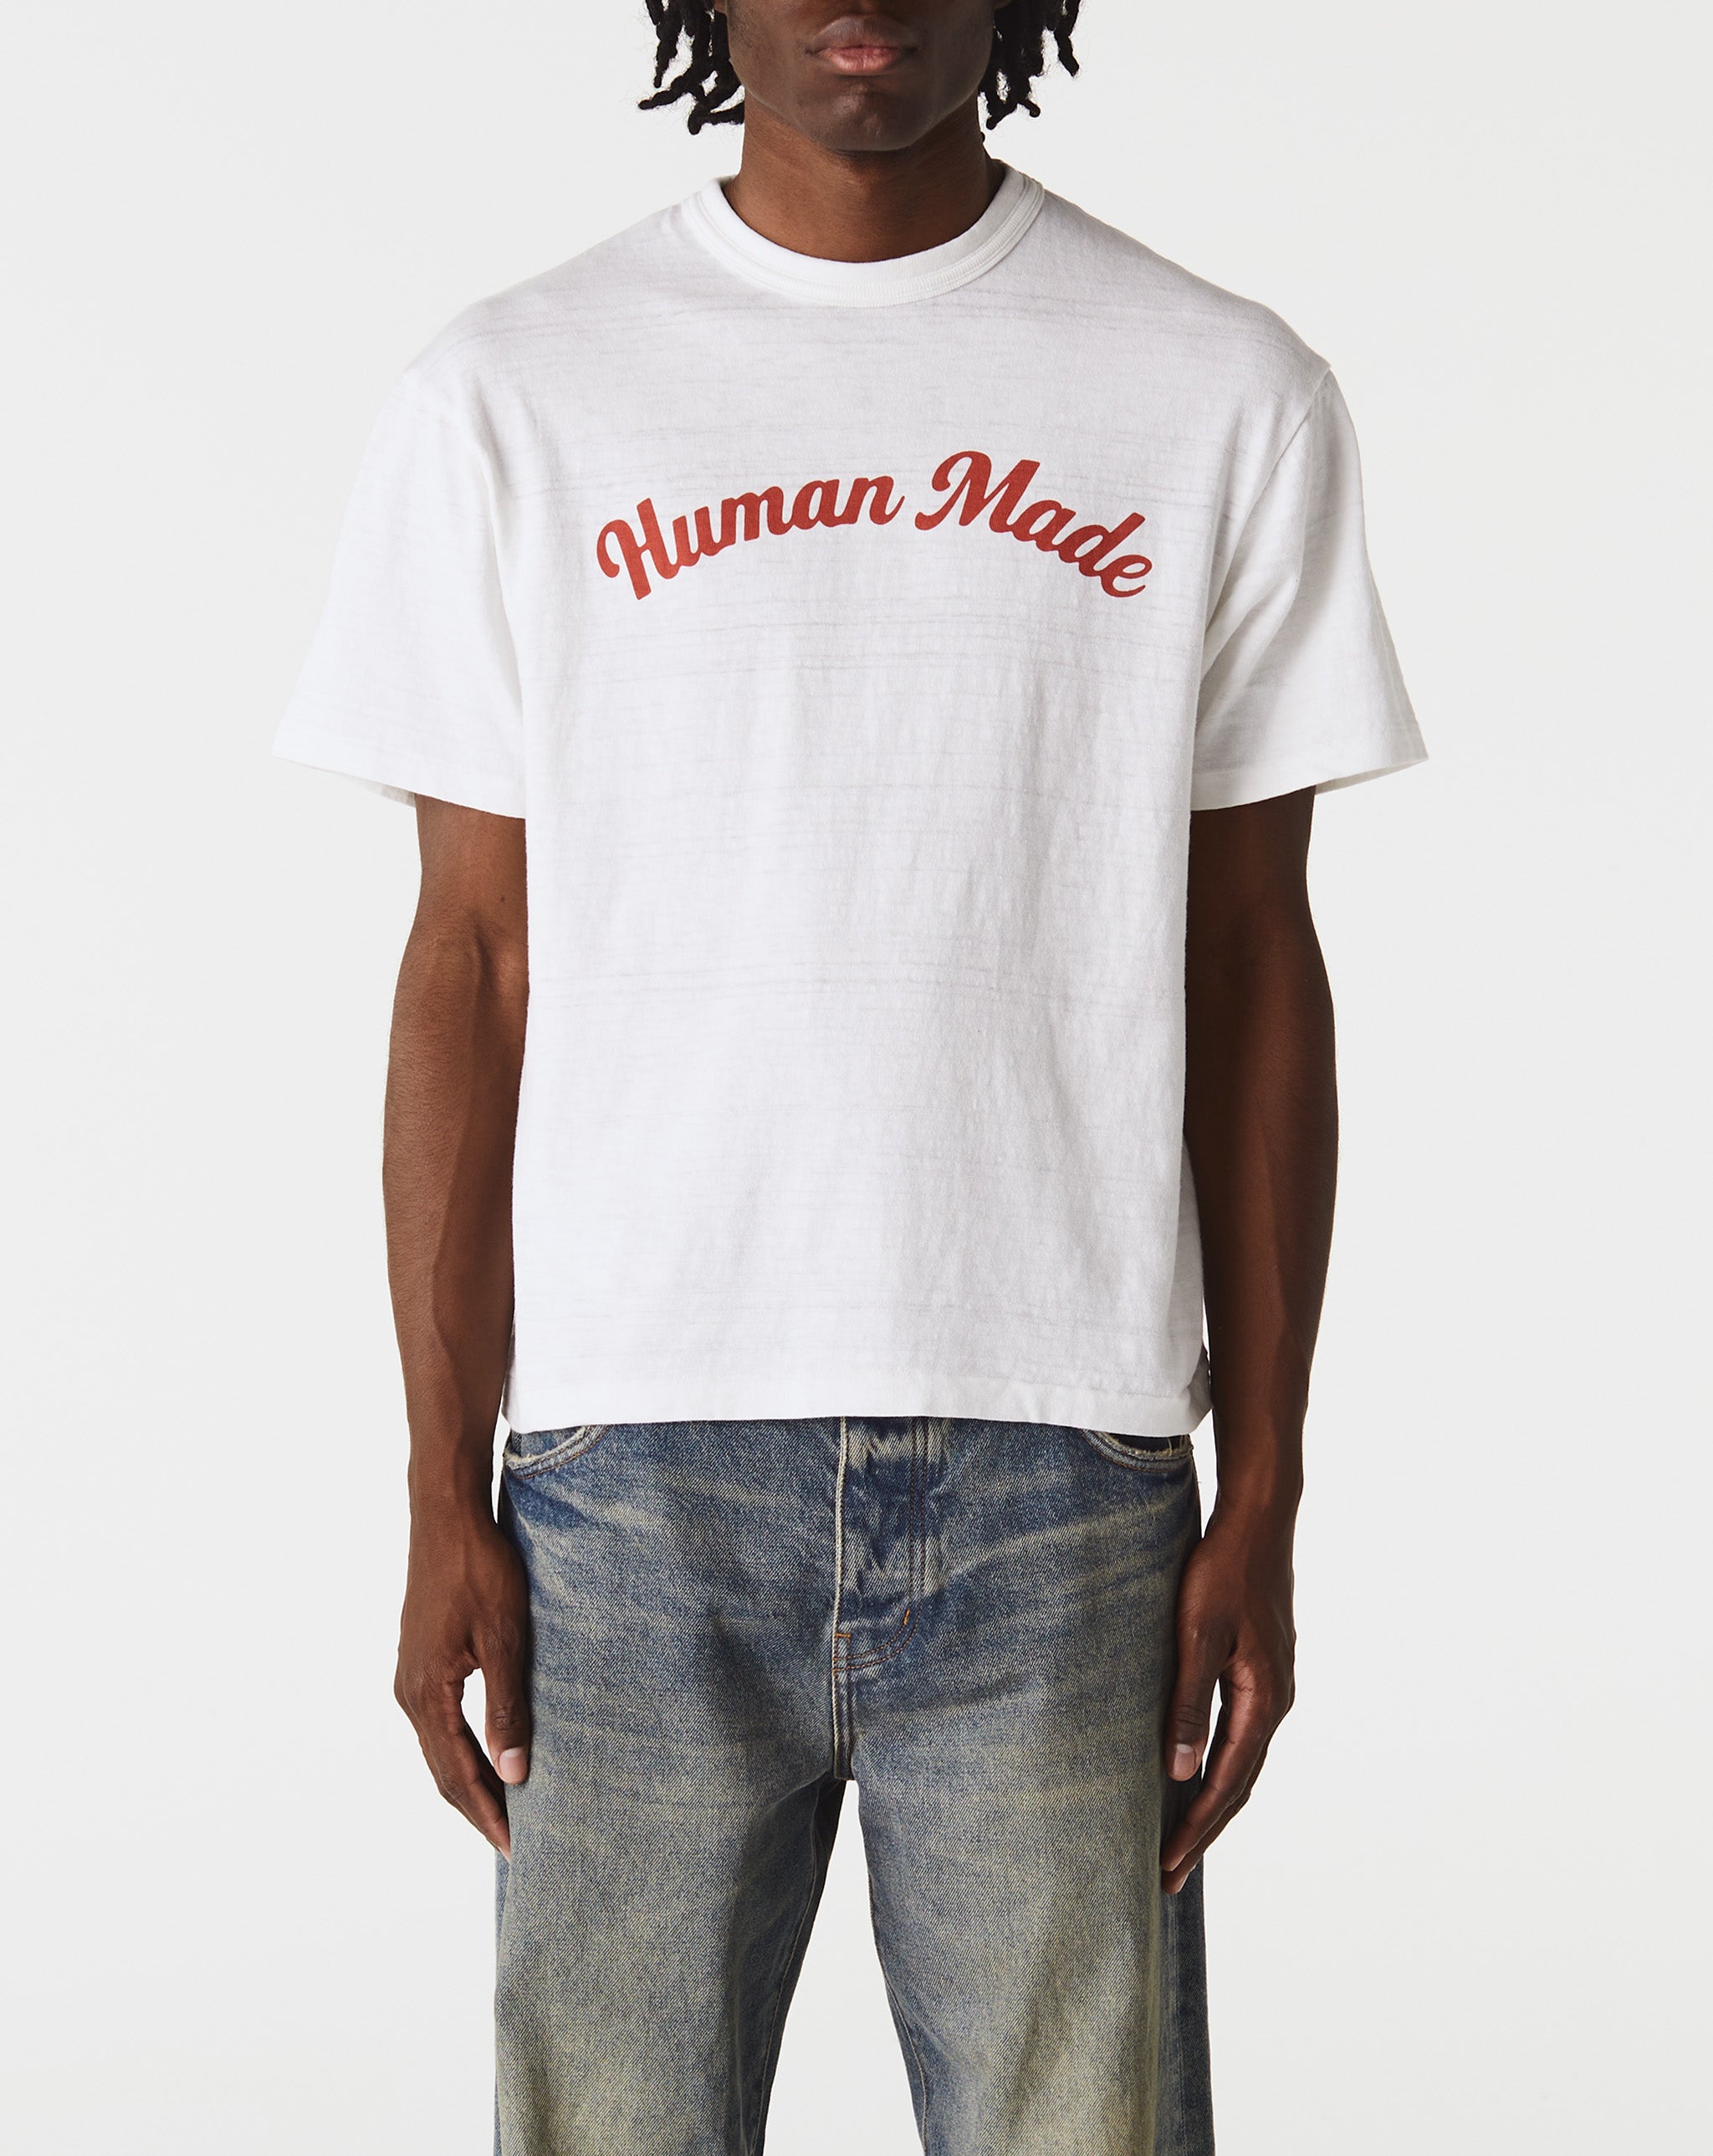 Human Made Shirts & Polos  - Cheap Cerbe Jordan outlet